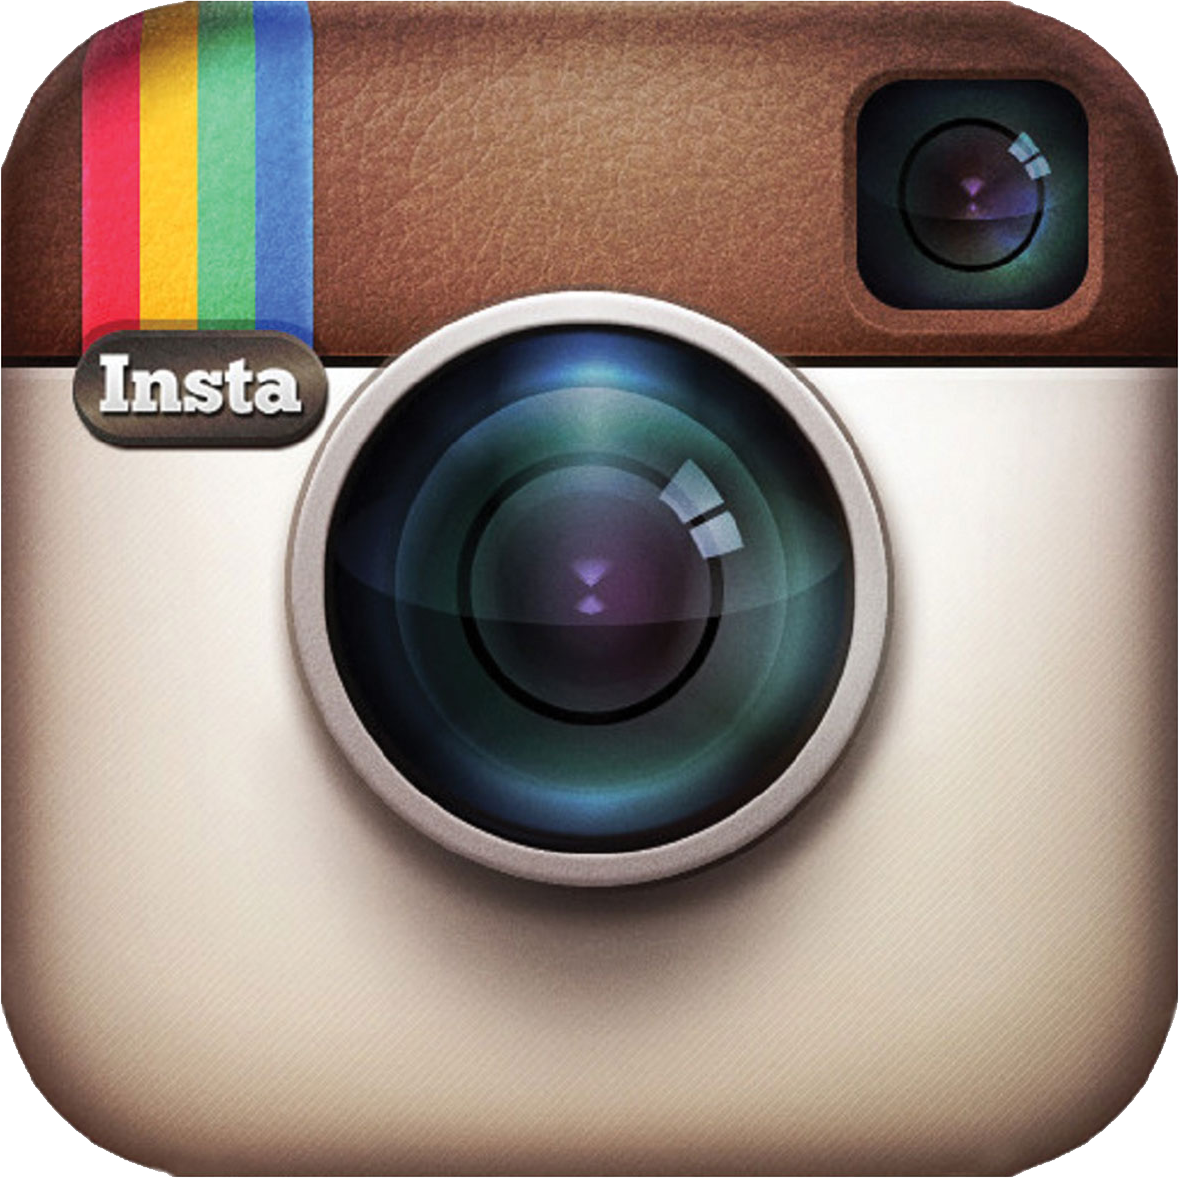 Download old instagram logo PNG Image for Free